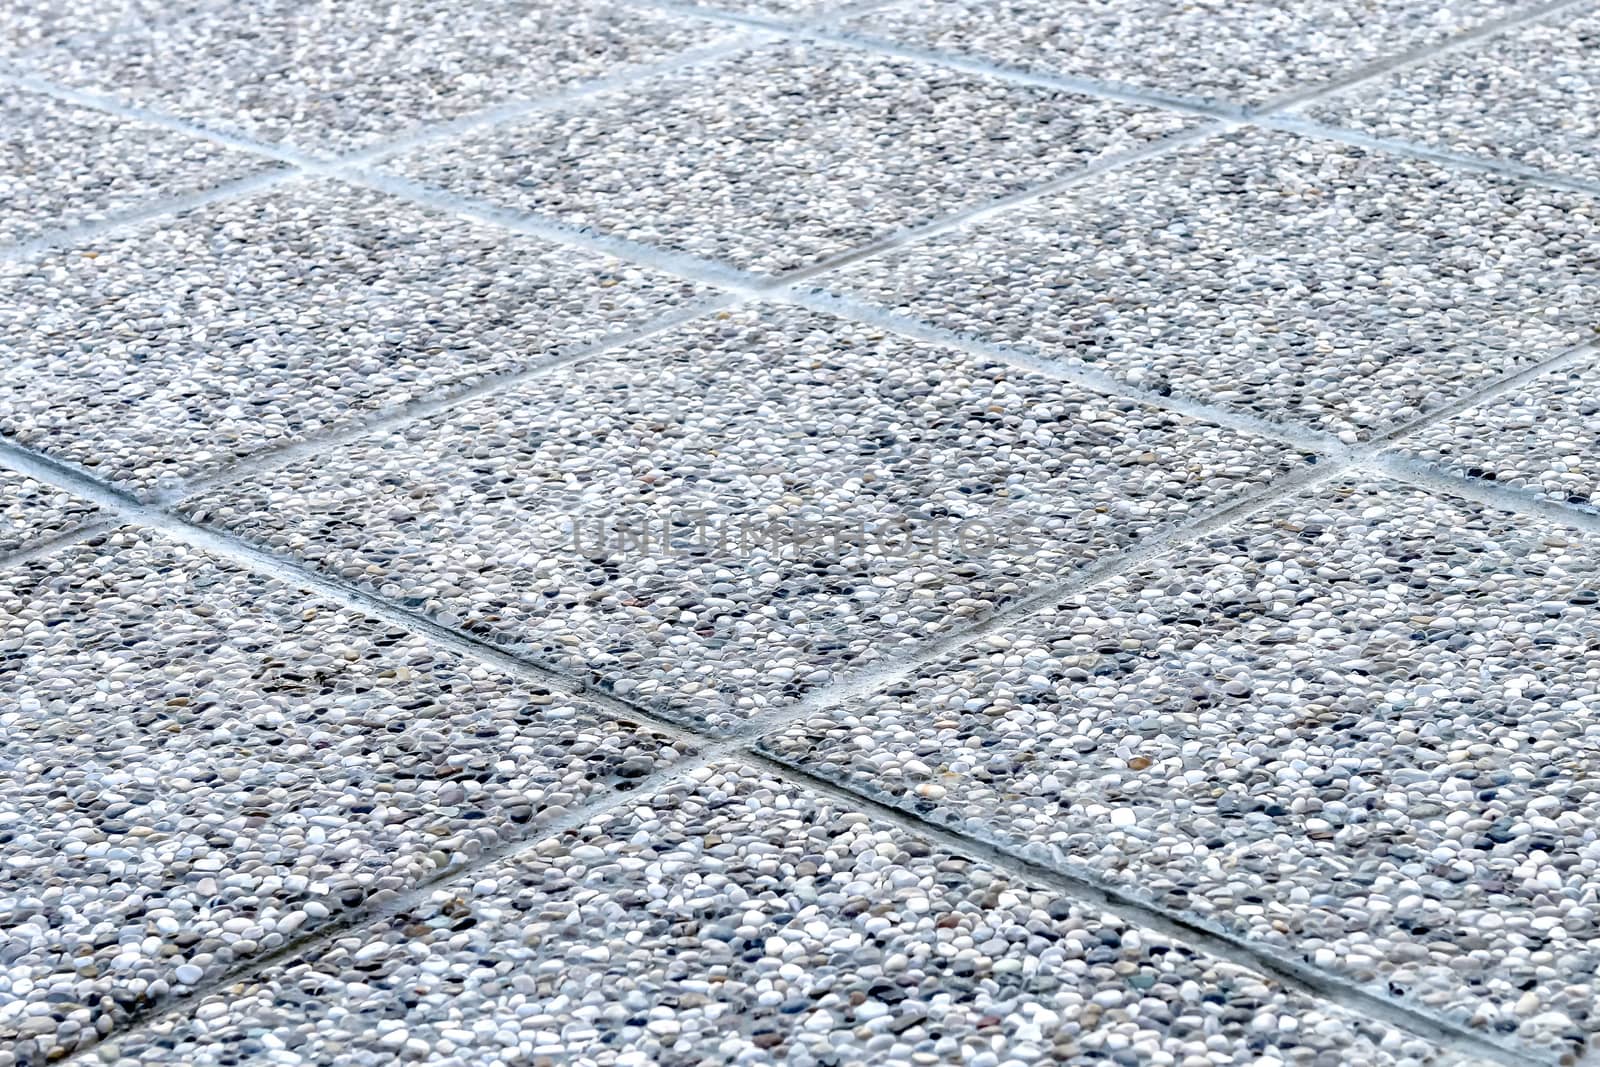 Detailed shot of pebbled tiles, outdoors terrace flooring